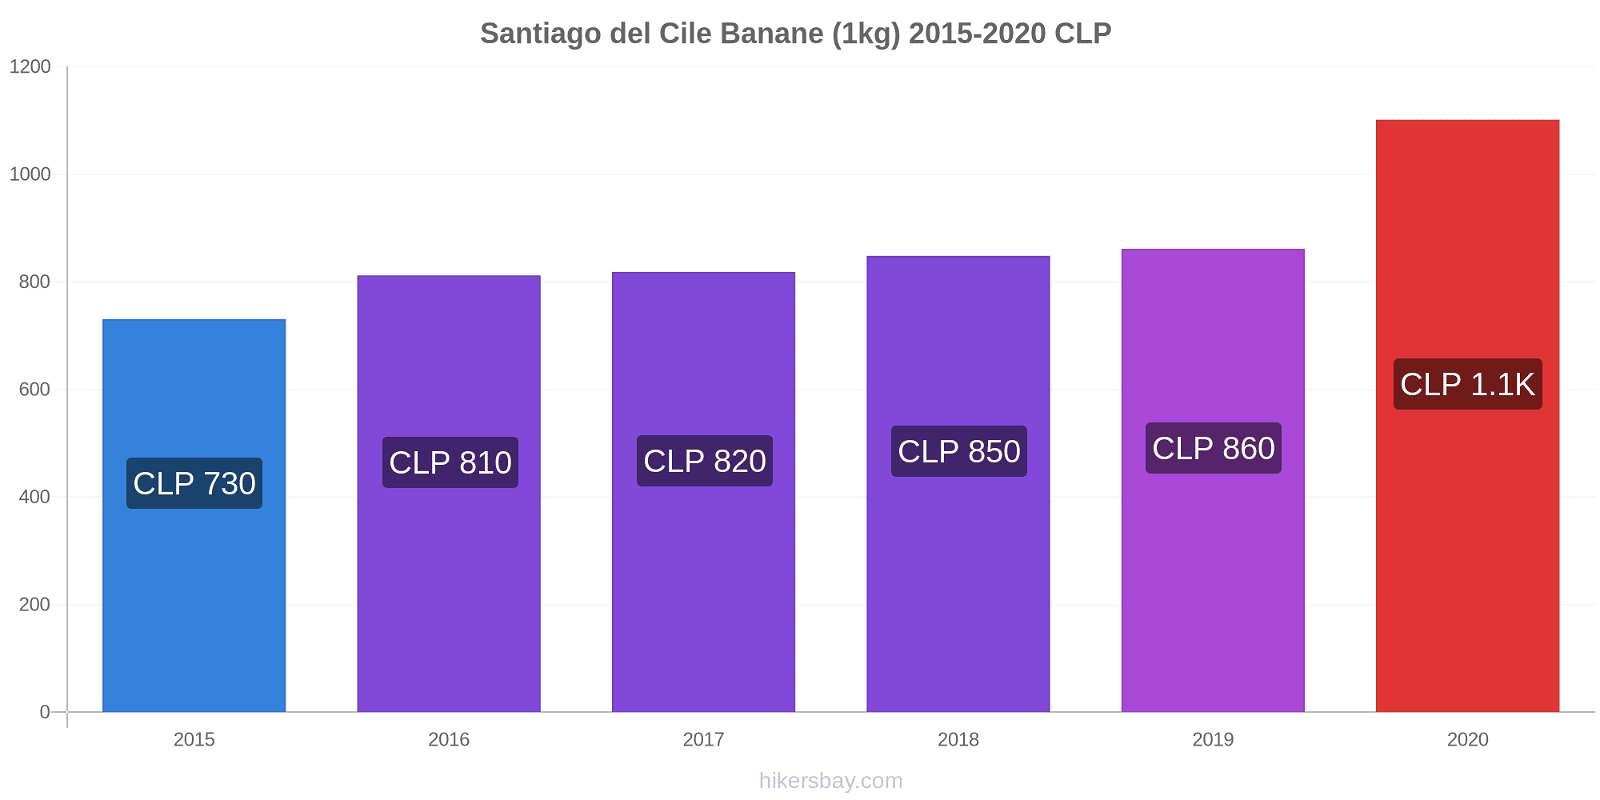 Santiago del Cile variazioni di prezzo Banana (1kg) hikersbay.com